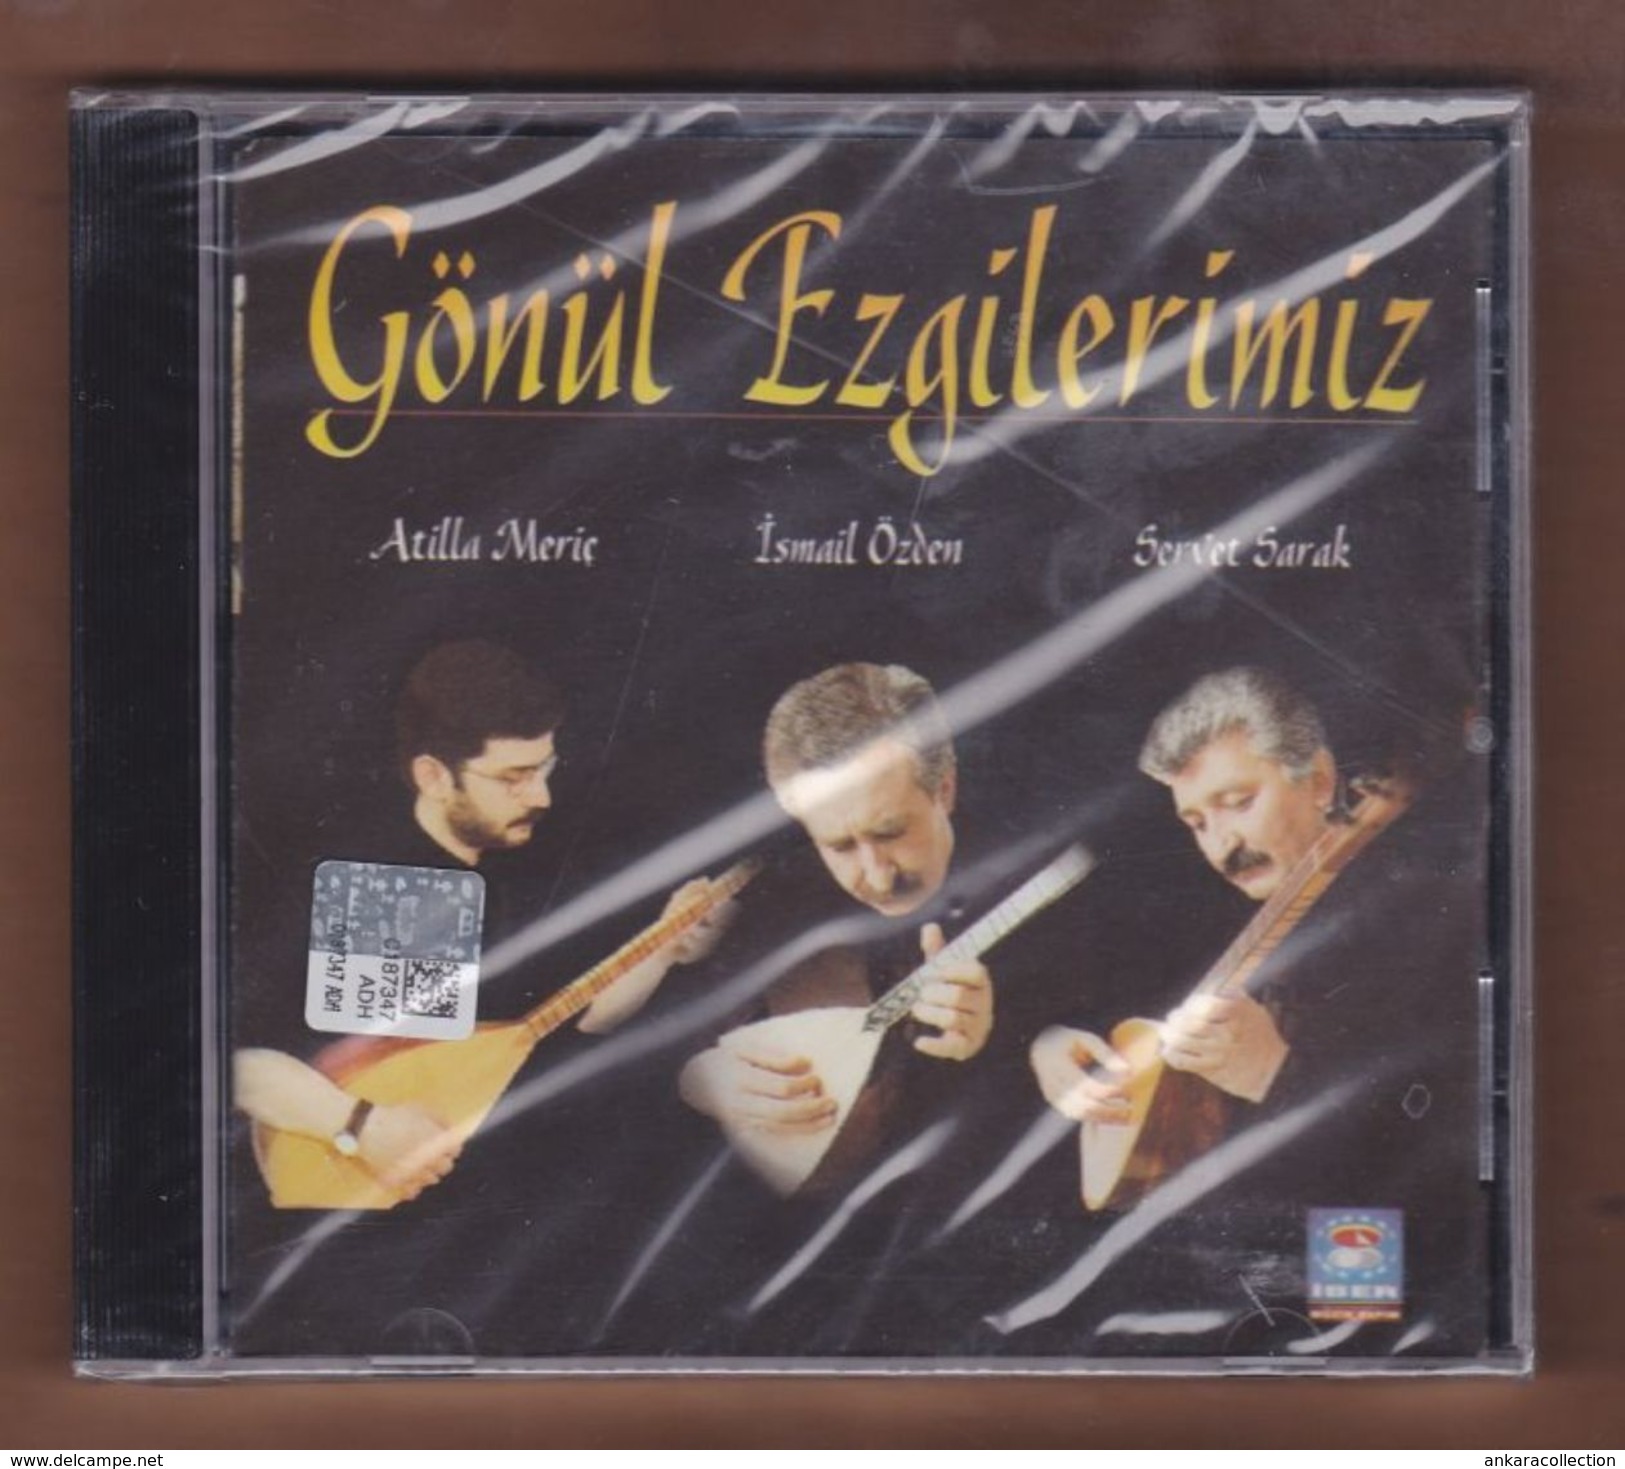 AC -  Atilla Meriç Ismail özden Servet Sarak Gözül Ezgilerimiz BRAND NEW TURKISH MUSIC CD - Musiques Du Monde